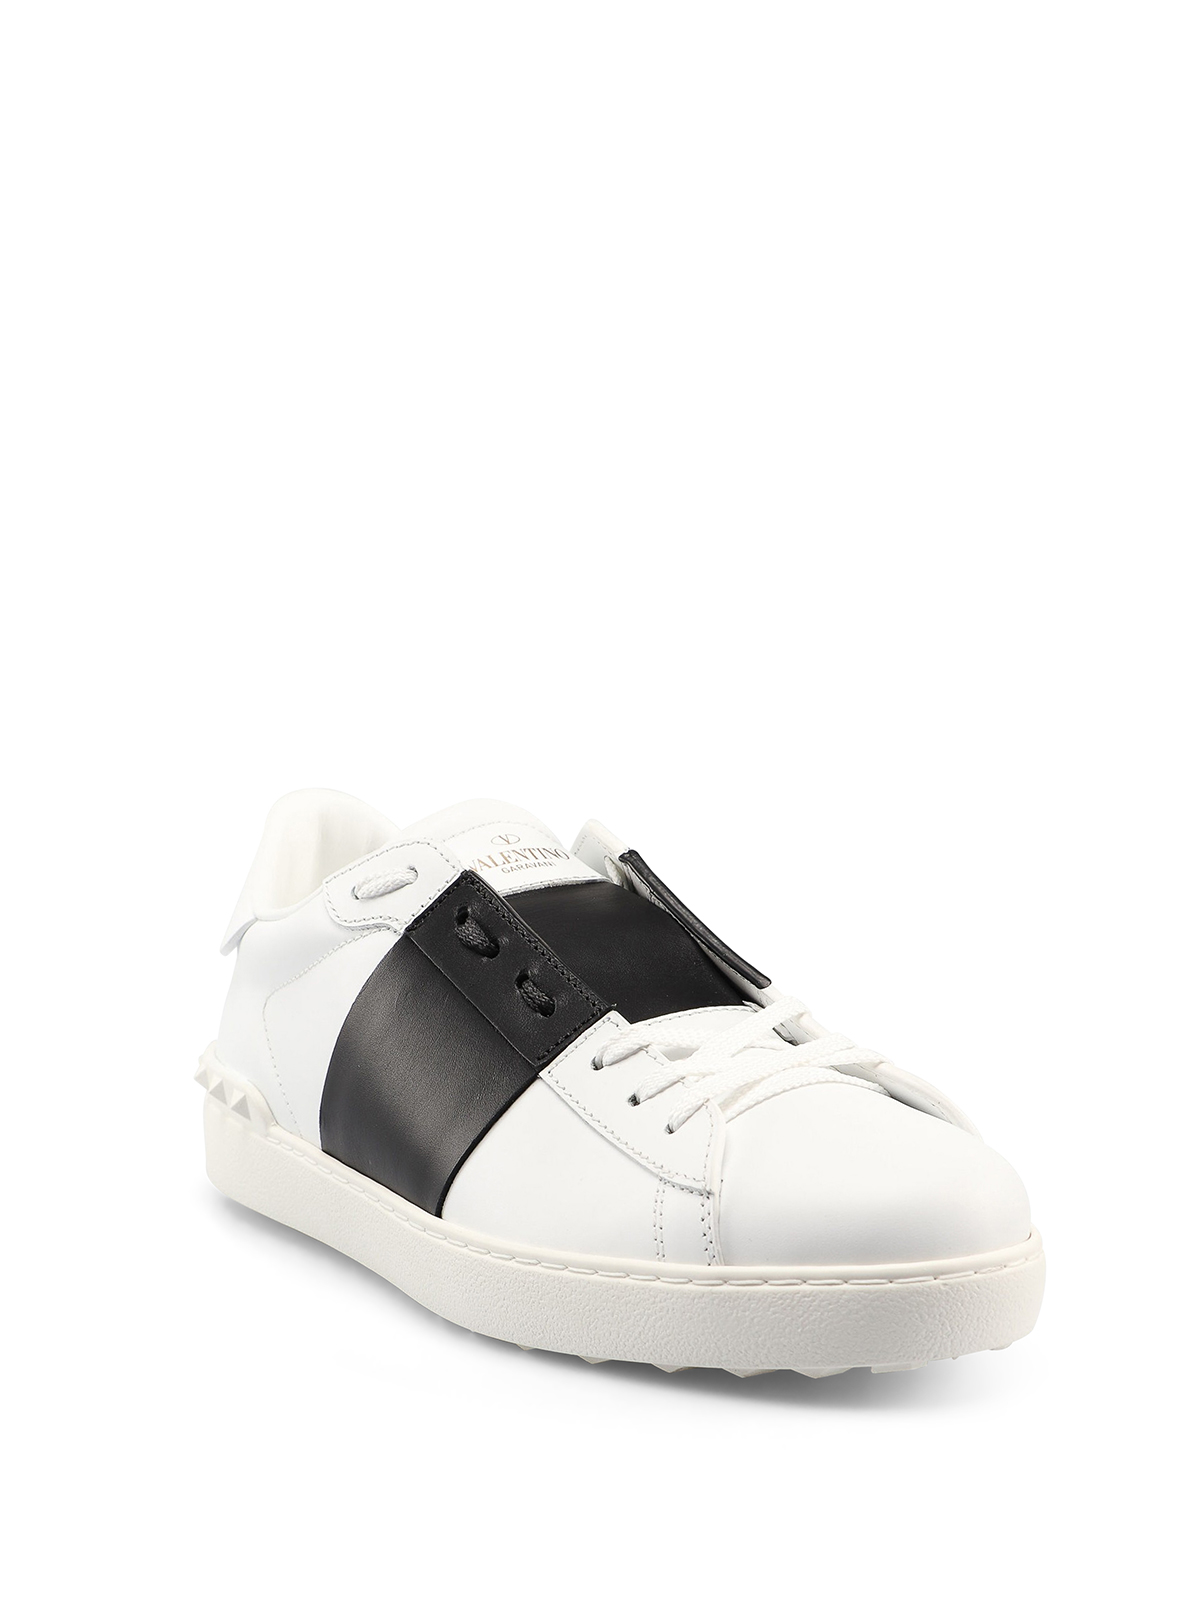 Valentino Garavani - Black white leather sneakers - RY0S0830BLUA01